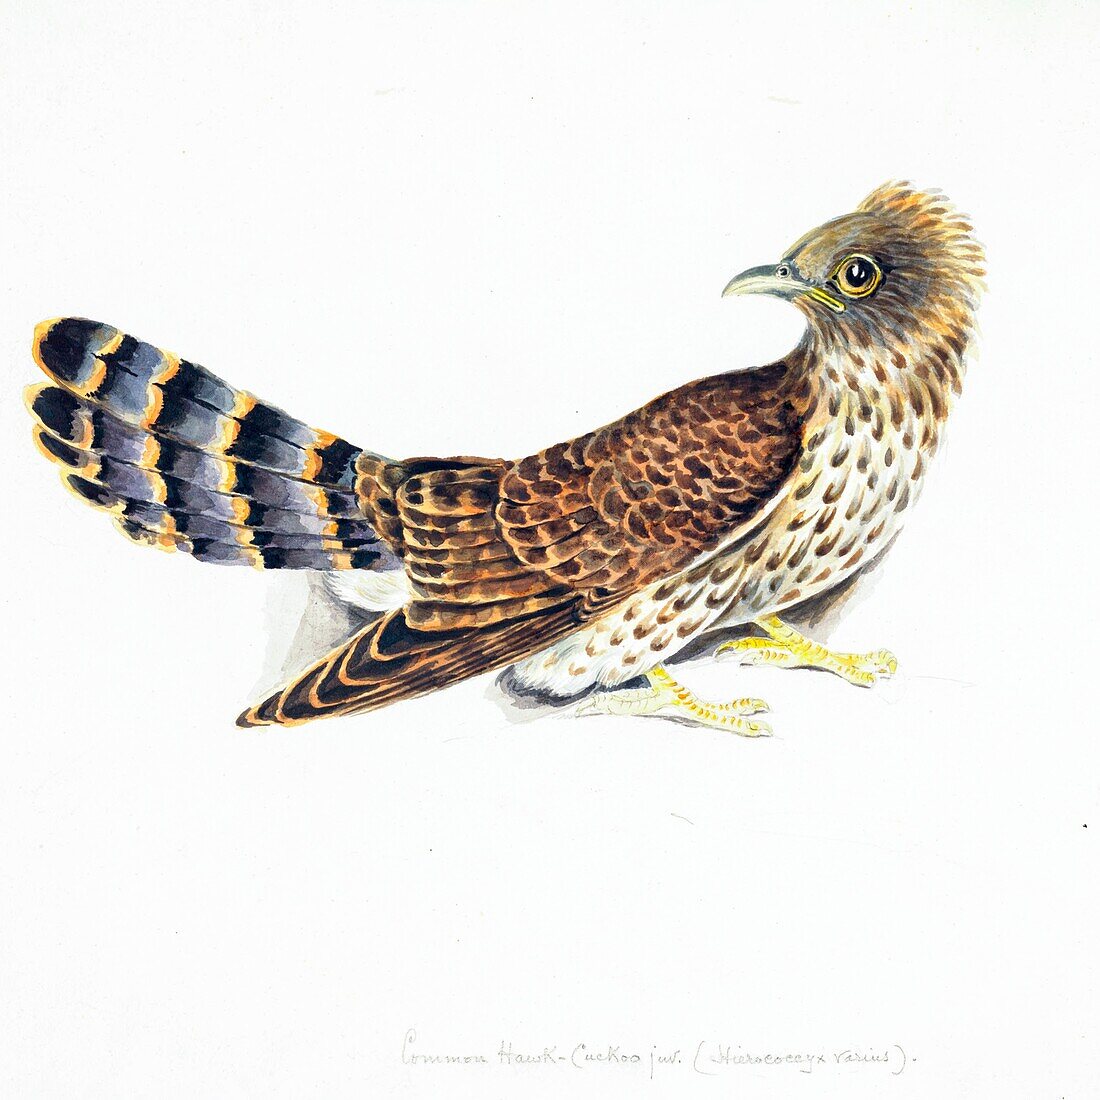 Common hawk-cuckoo, 18th century illustration